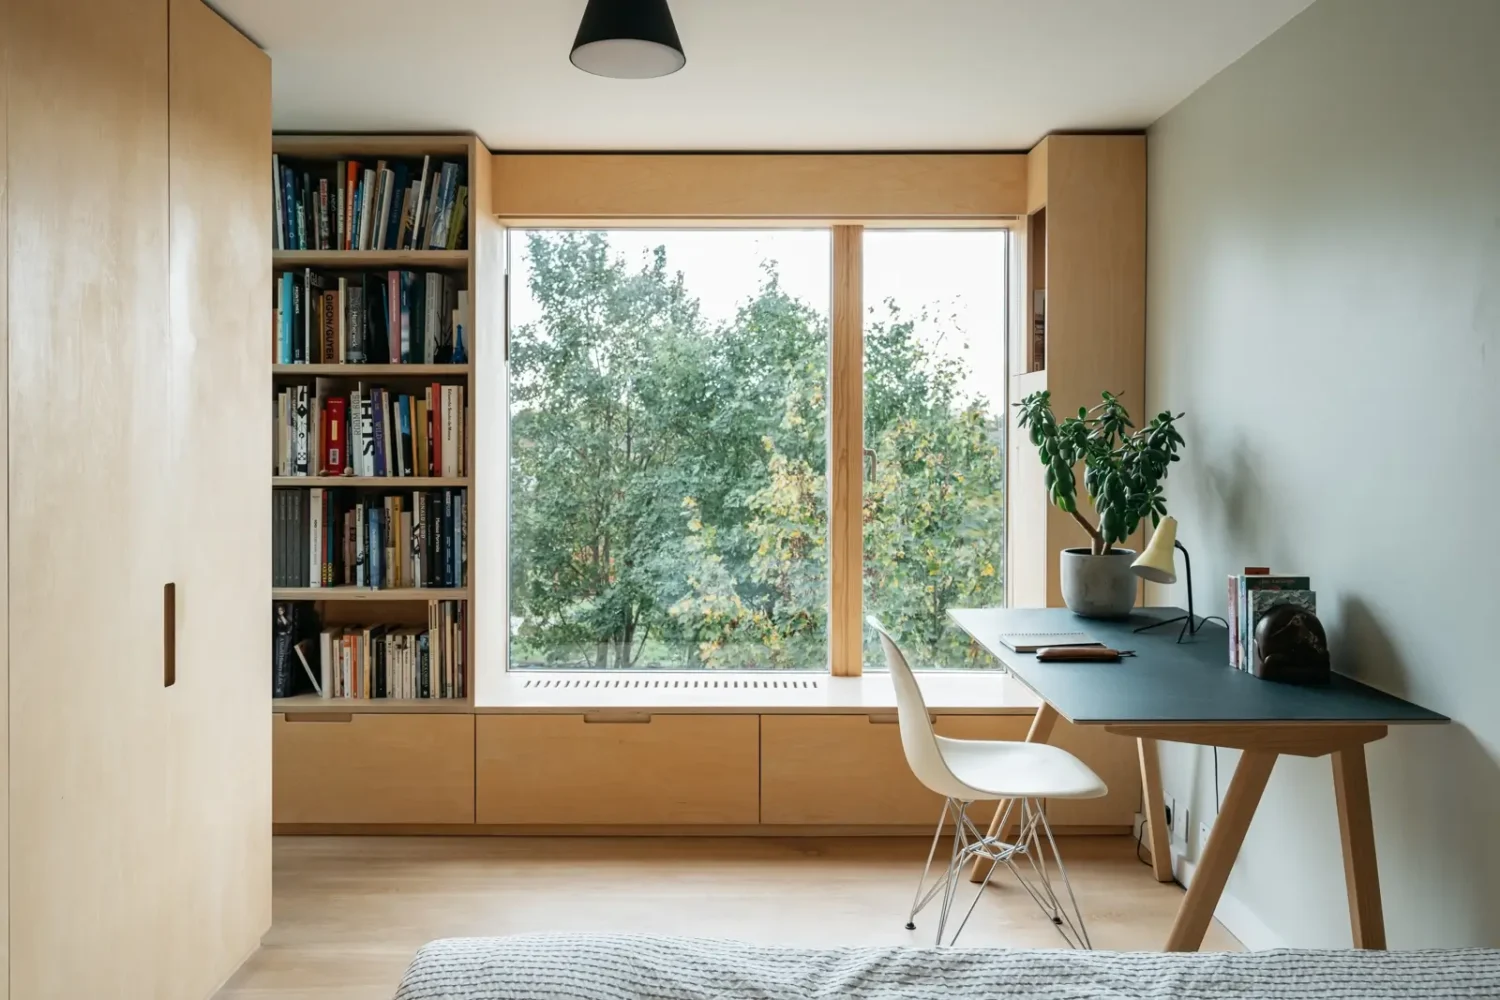 bedroom home office built in closets bookshelves window seat